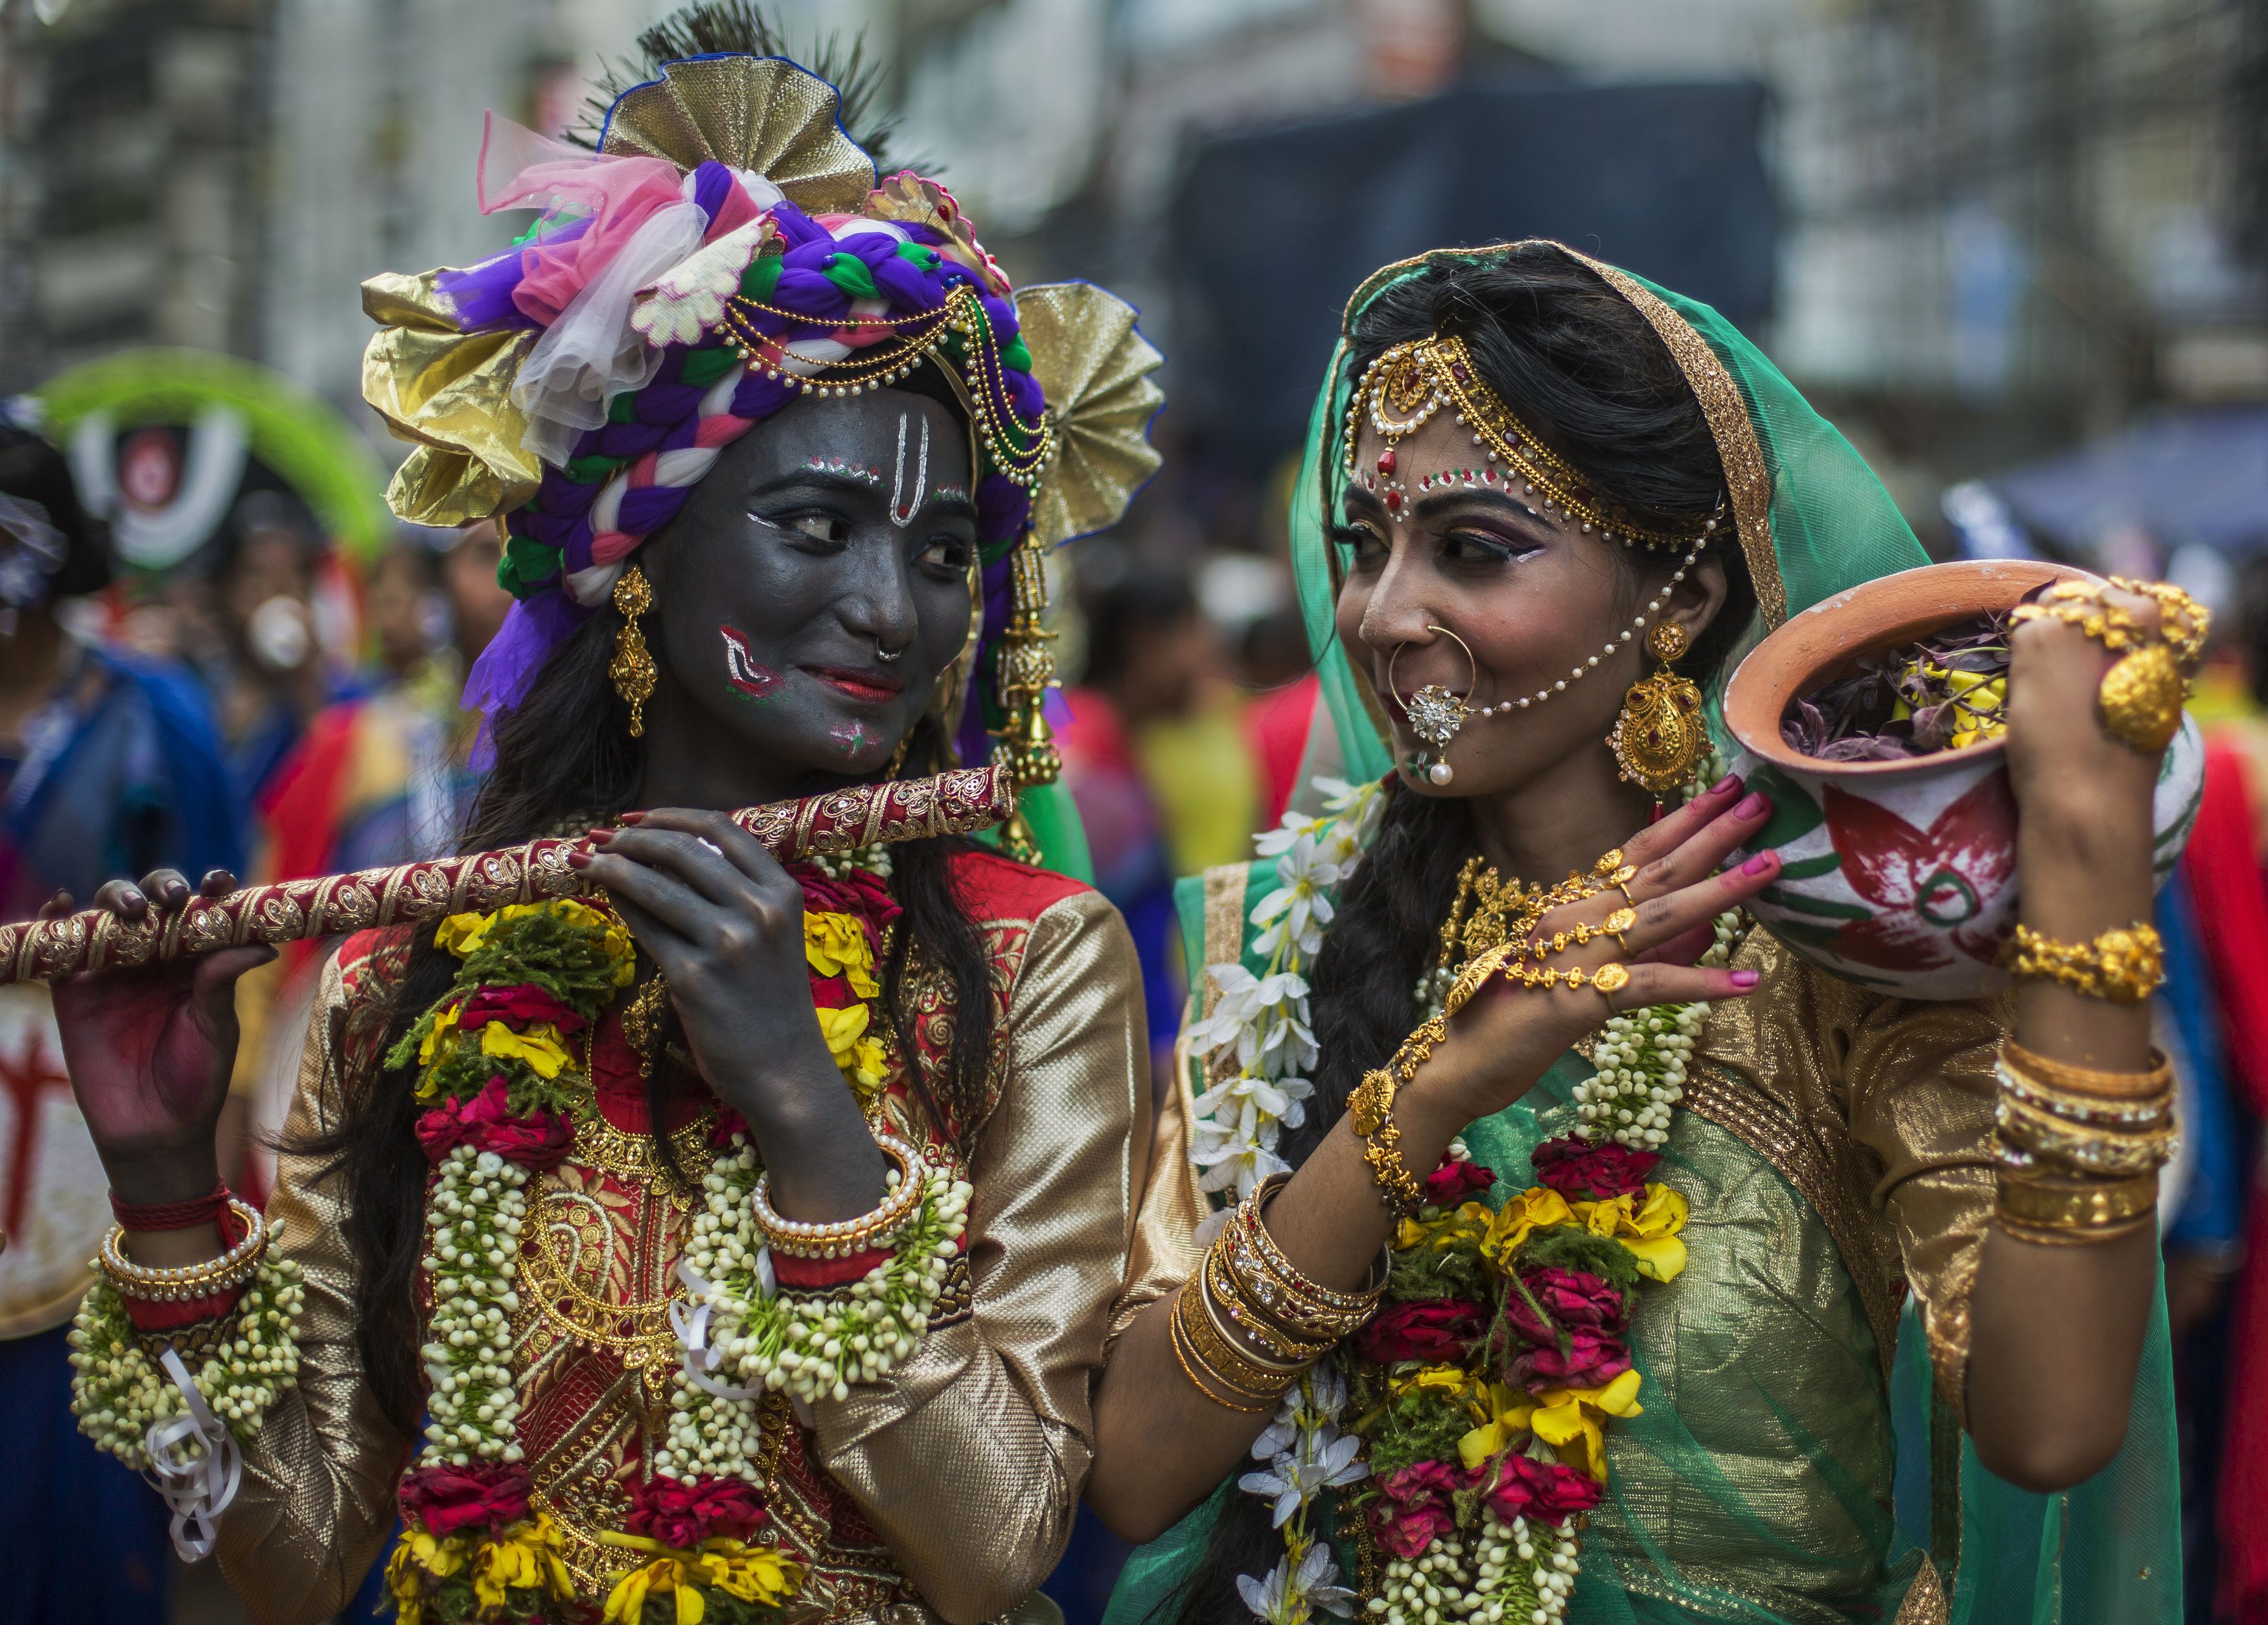 Festival, Street, Religious, Travel, sanchayan chowdhury